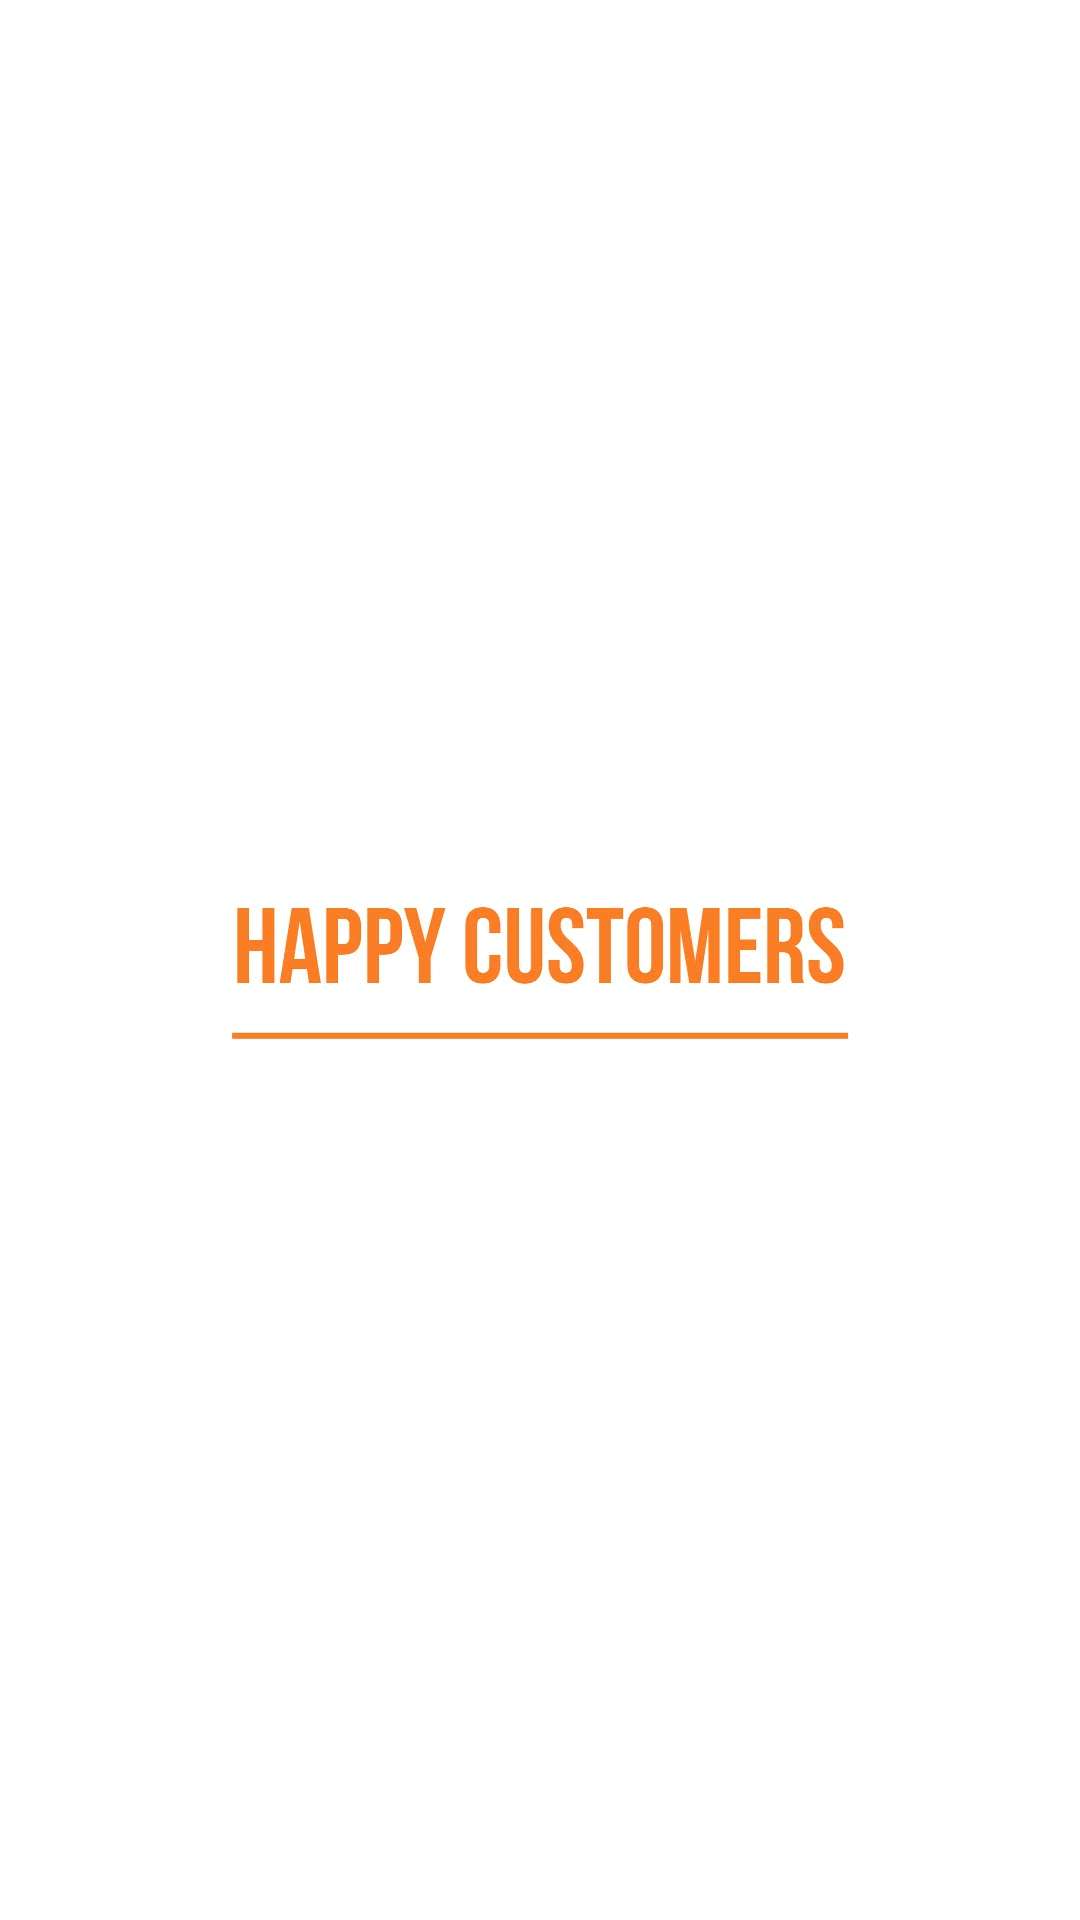 Happy Customers
.
.
 #happycustomers #furnitures #furnituremanufacturer #furnitureshowroom